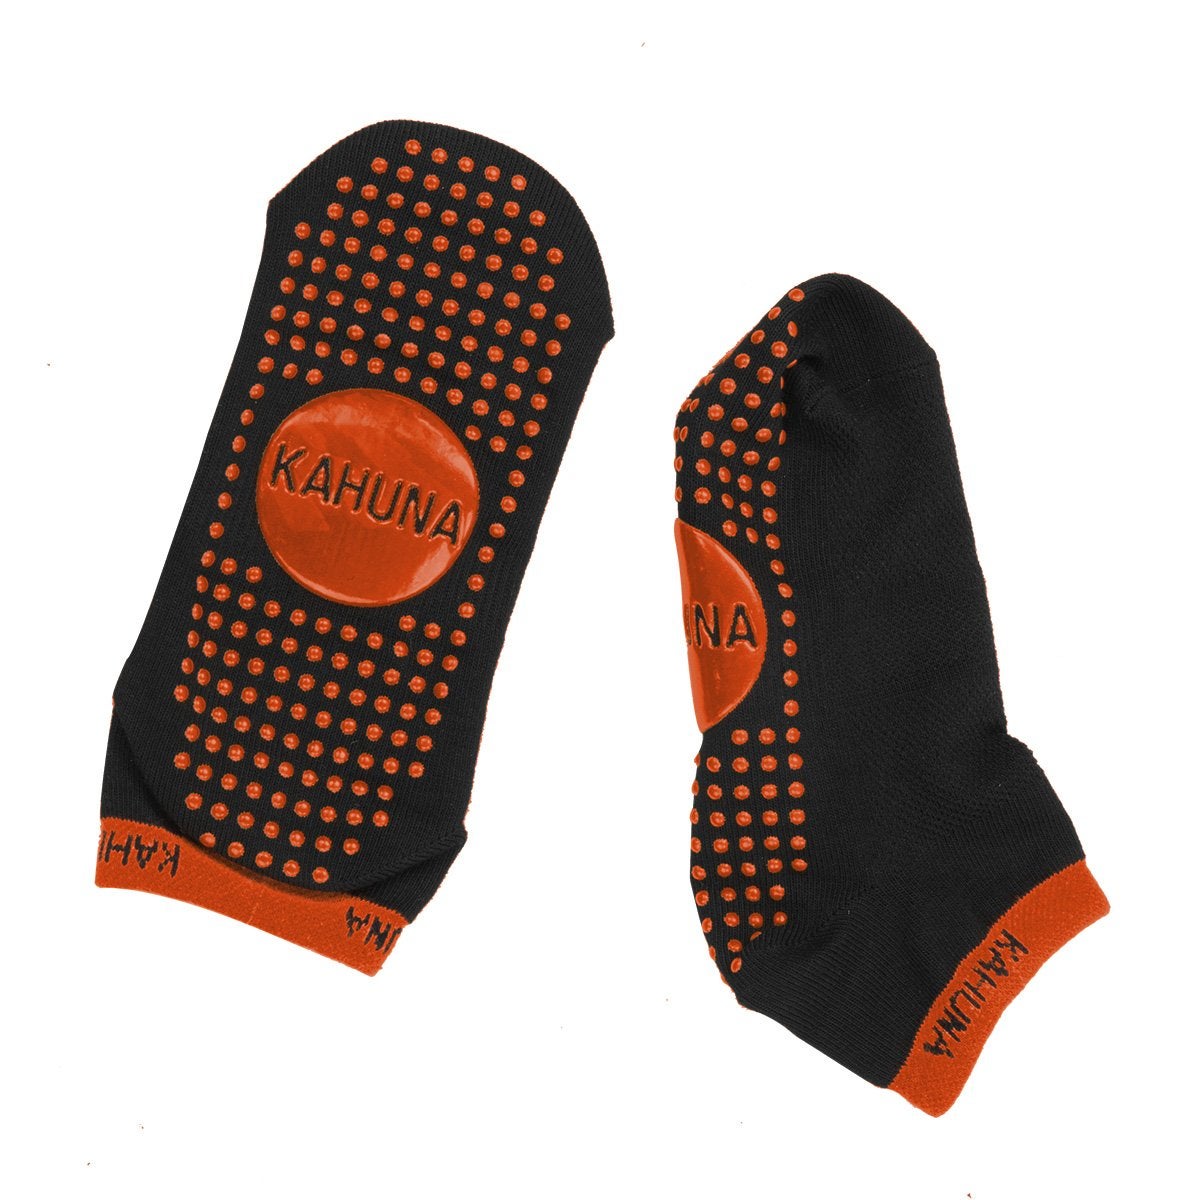 Kahuna Trampoline Kids Safety Anti-Slip Socks Pair- Medium